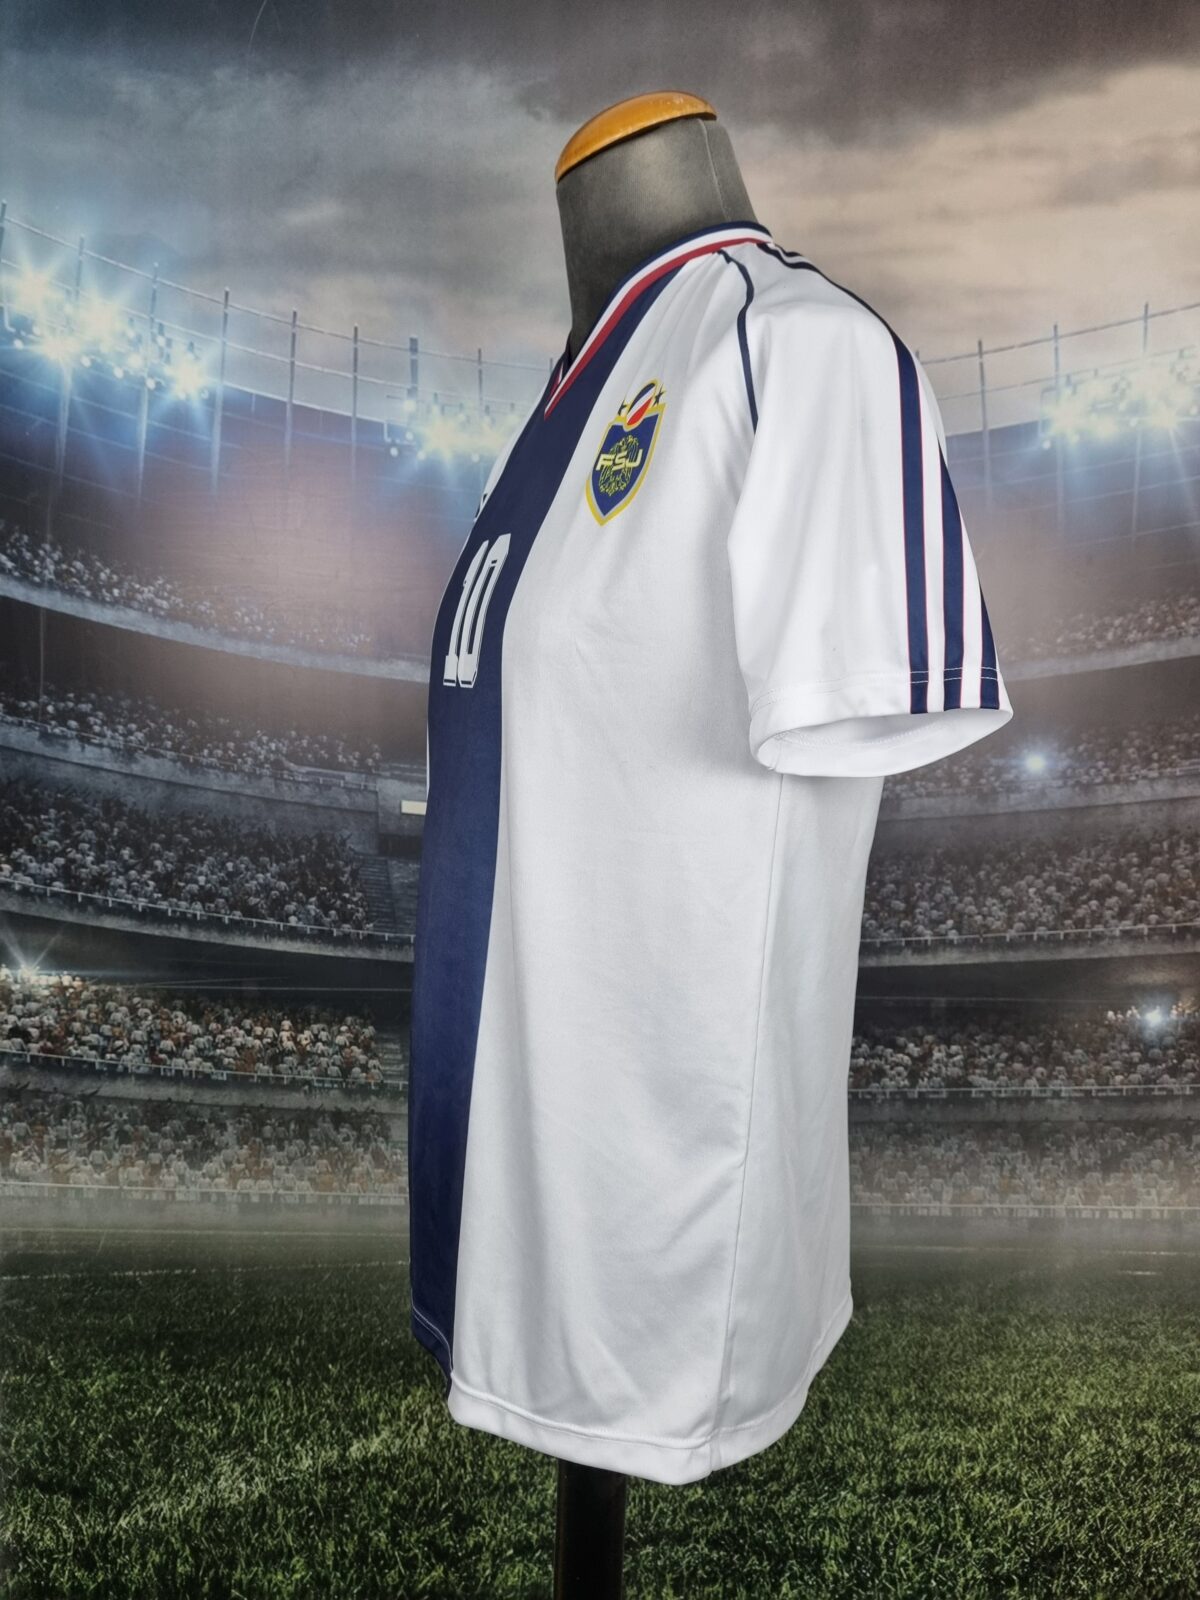 Yugoslavia Football Shirt 1998 World Cup Retro Savicevic #10 Jersey Retro Serbia - Sport Club Memories